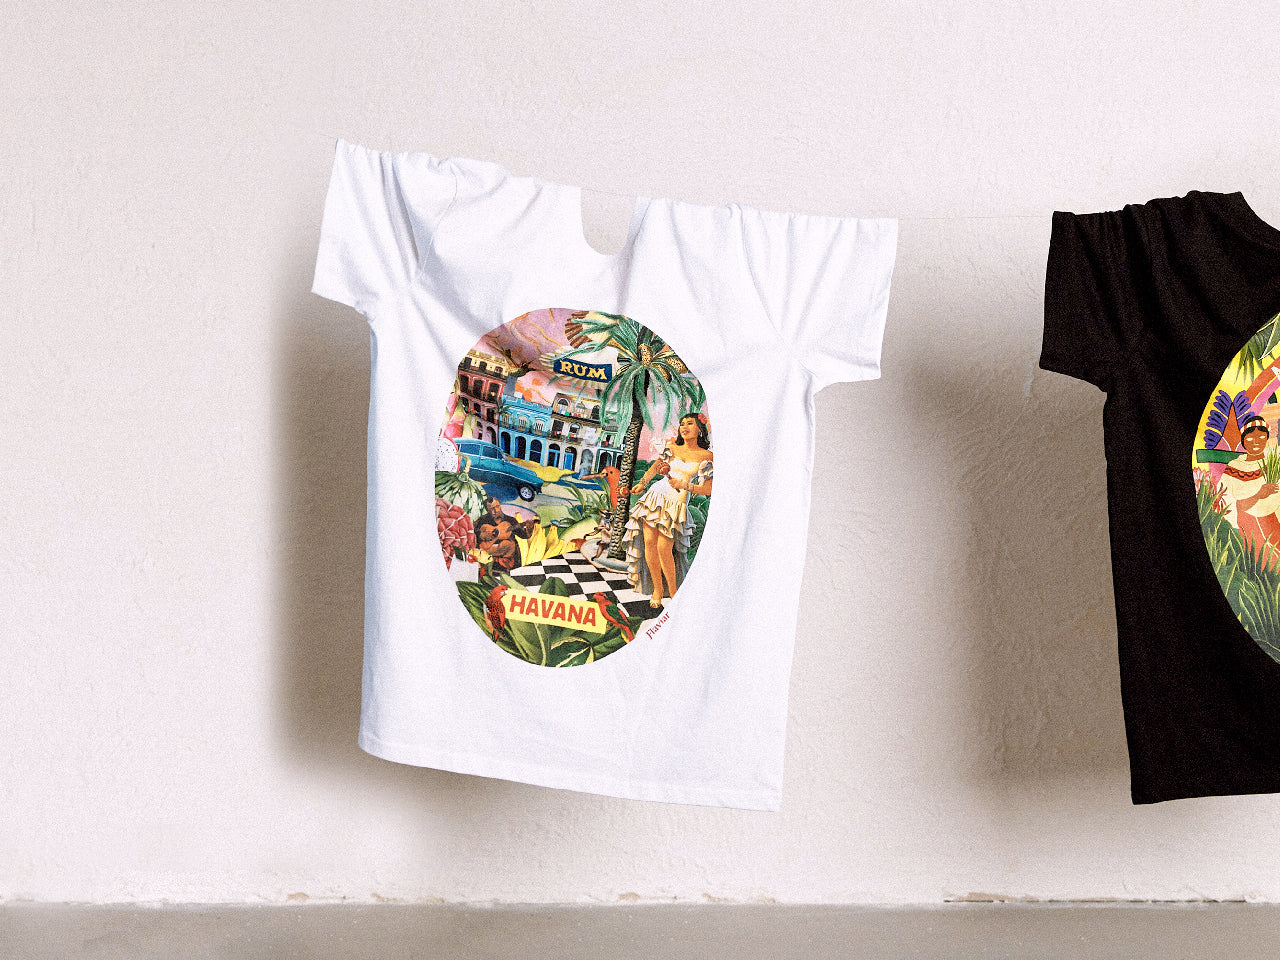 Carousel collection T-shirt - Havana (Male - L)